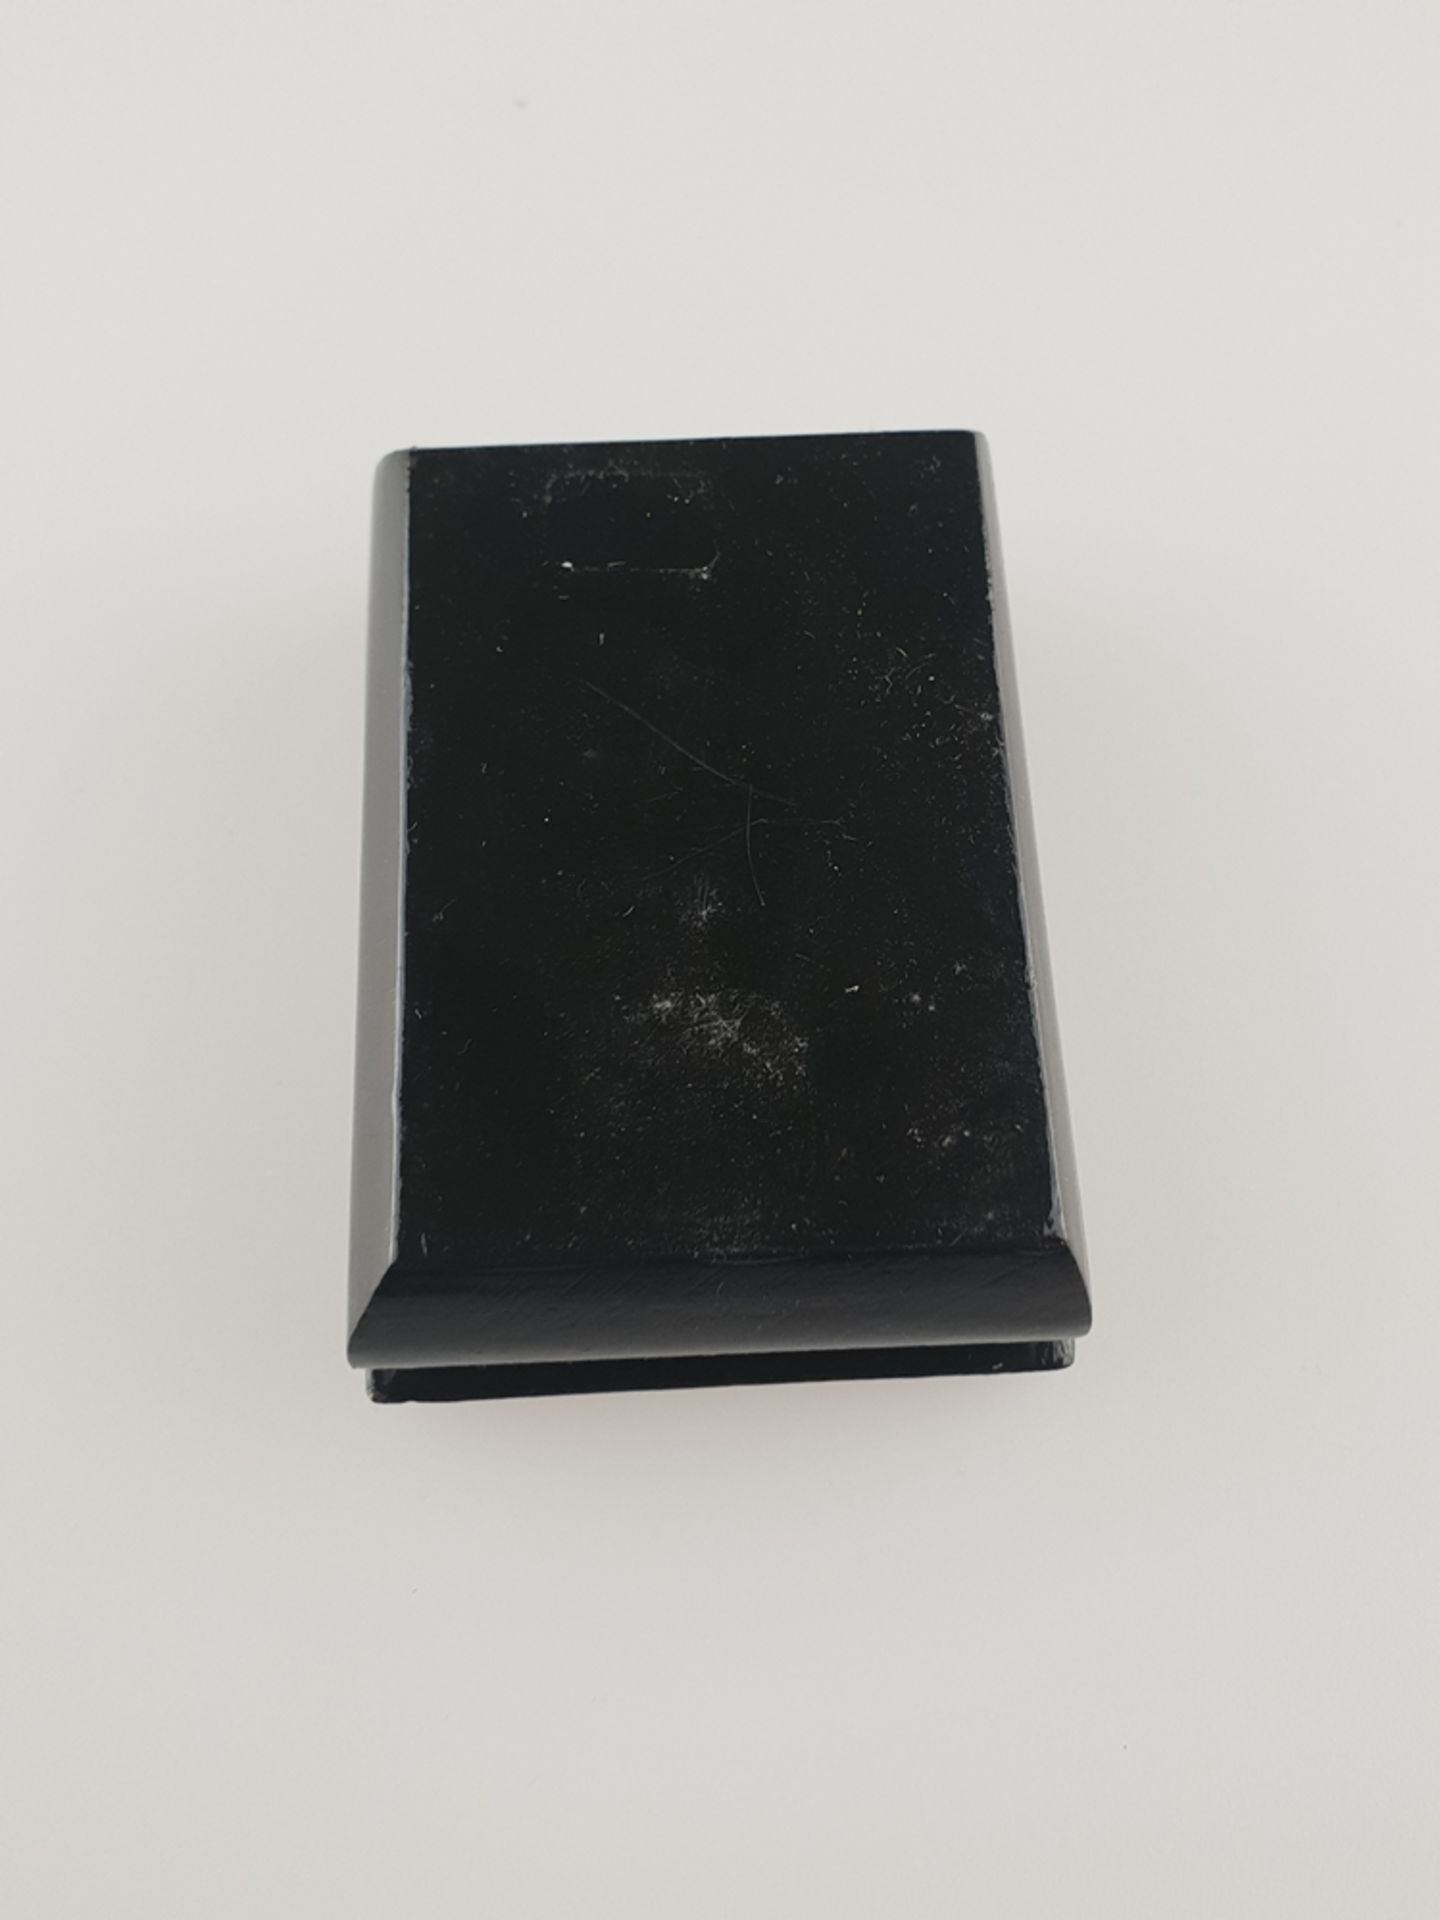 Russische Lackdose - Palech, 20. Jh., rechteckige Form, Holz, schwarz lackiert, Deckel polychrom - Bild 5 aus 5